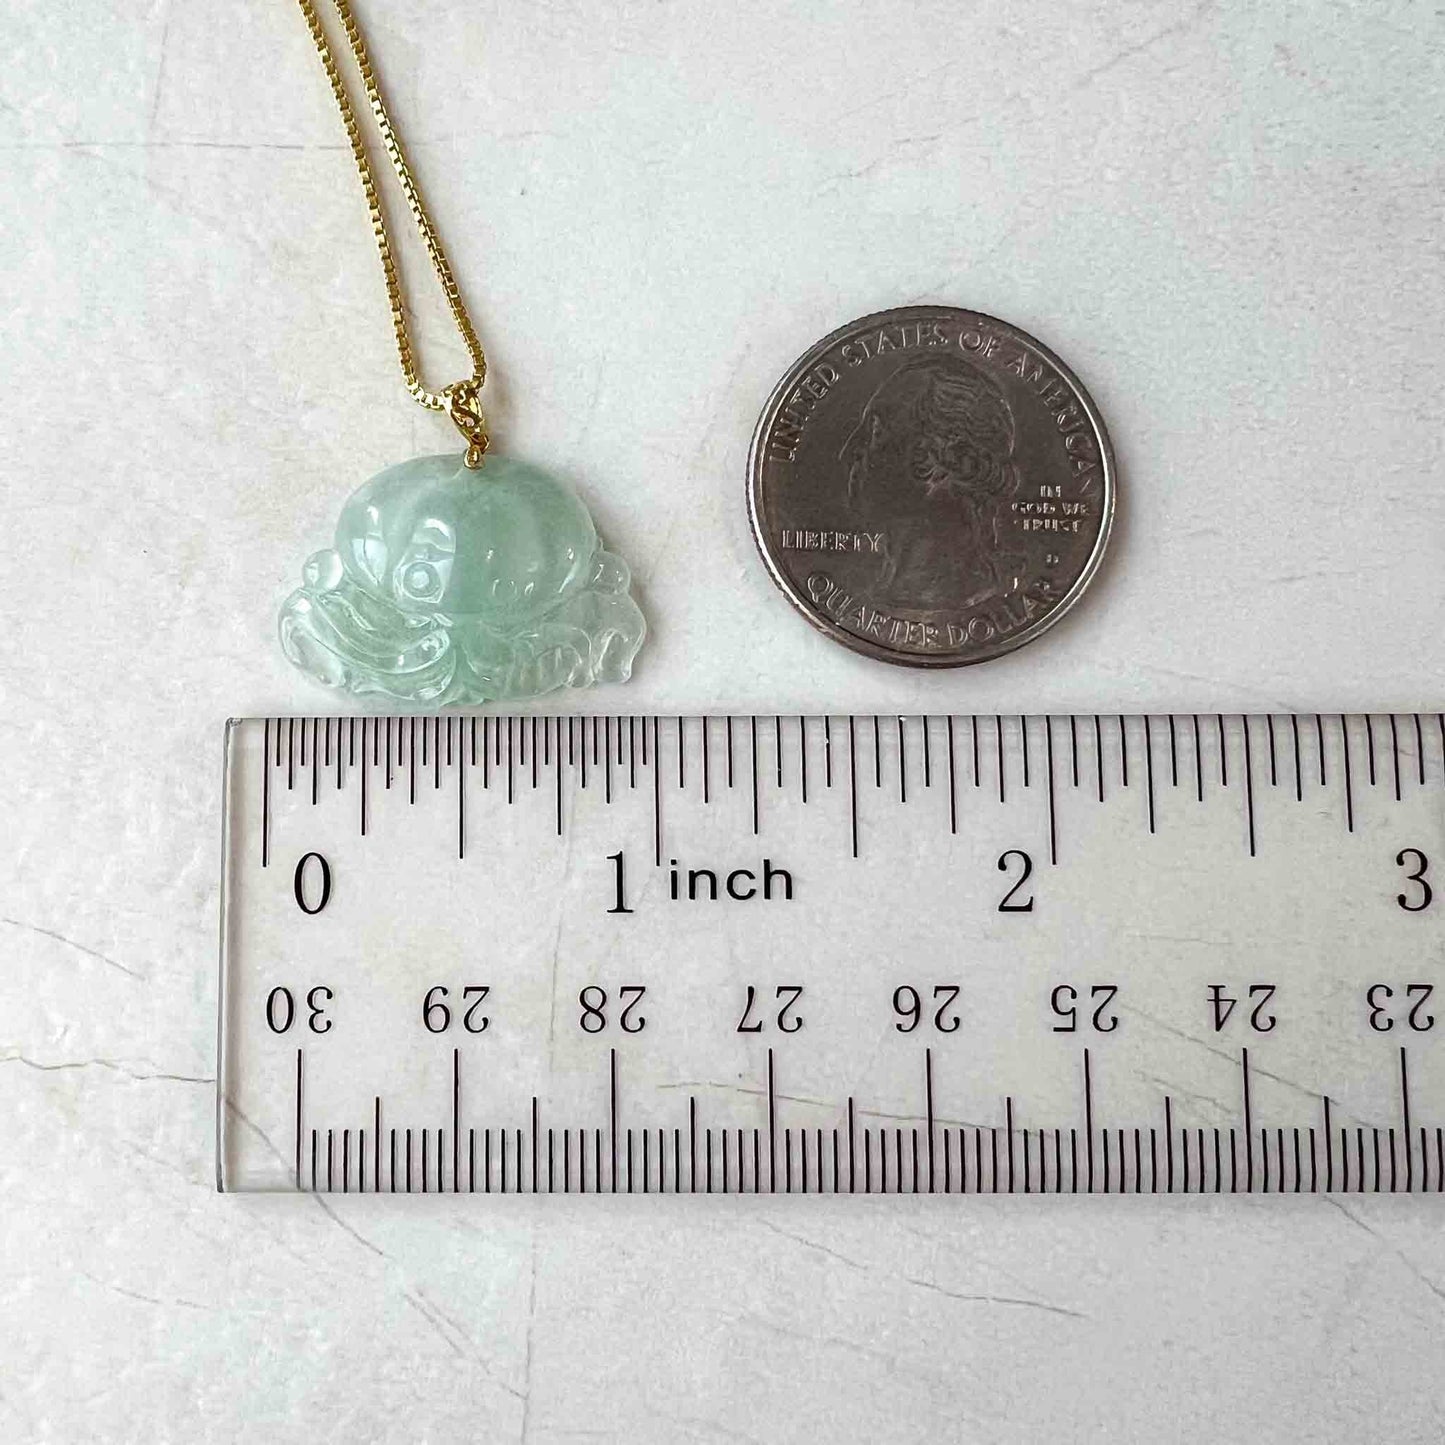 Mini Octopus Icy Jadeite Jade Pendant with 18K Solid Gold Bail, XZG-1122-1688873107